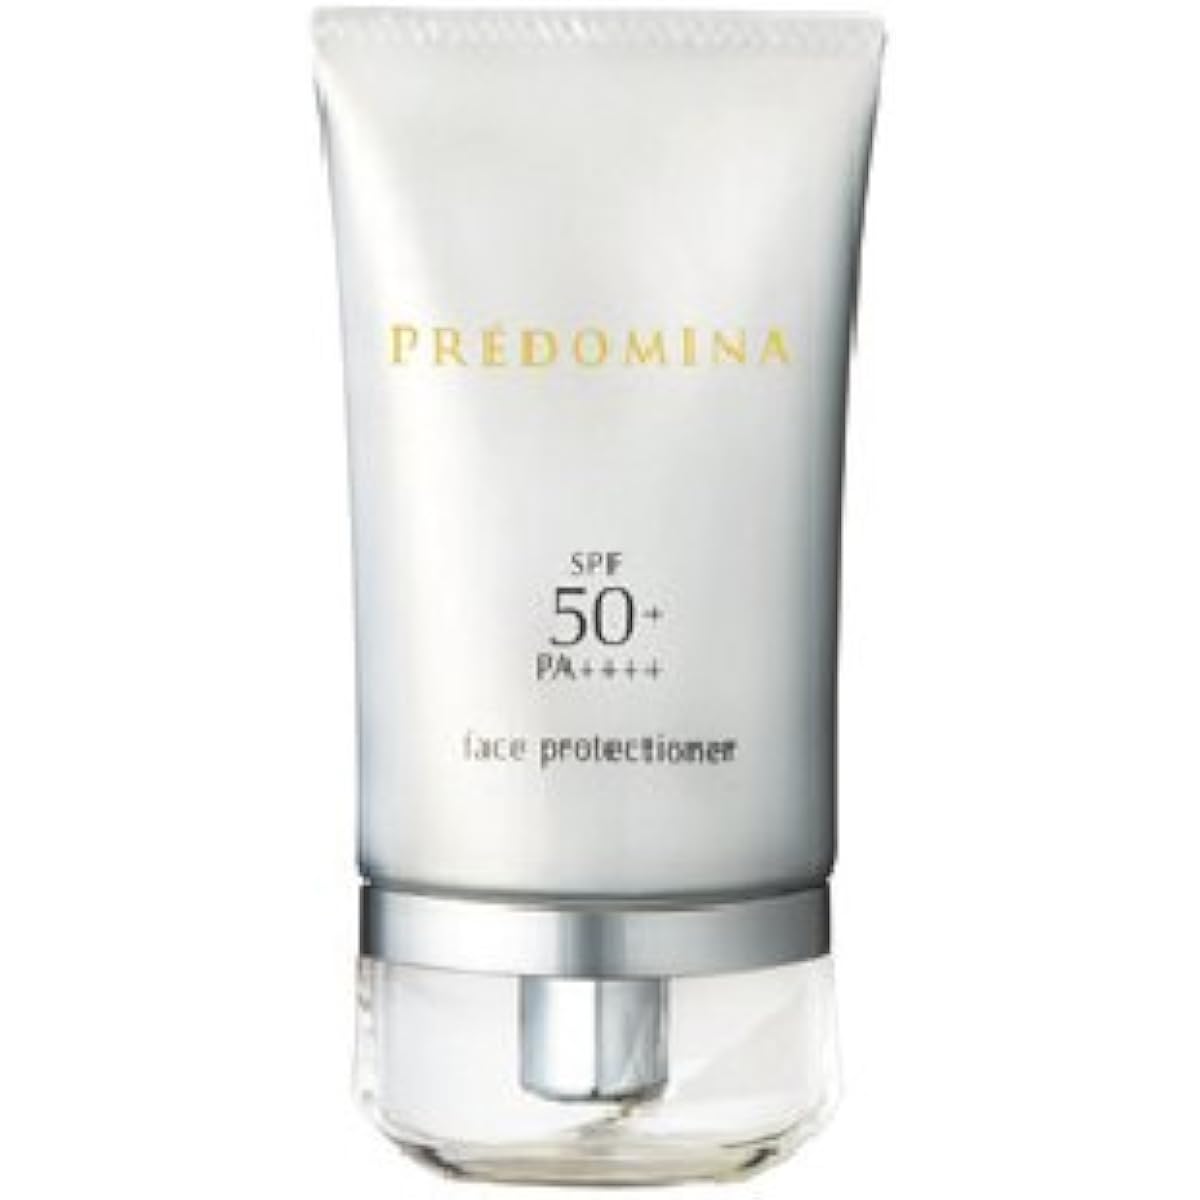 Disira Predomina Face Protectioner SPF50+ PA++++ 55g